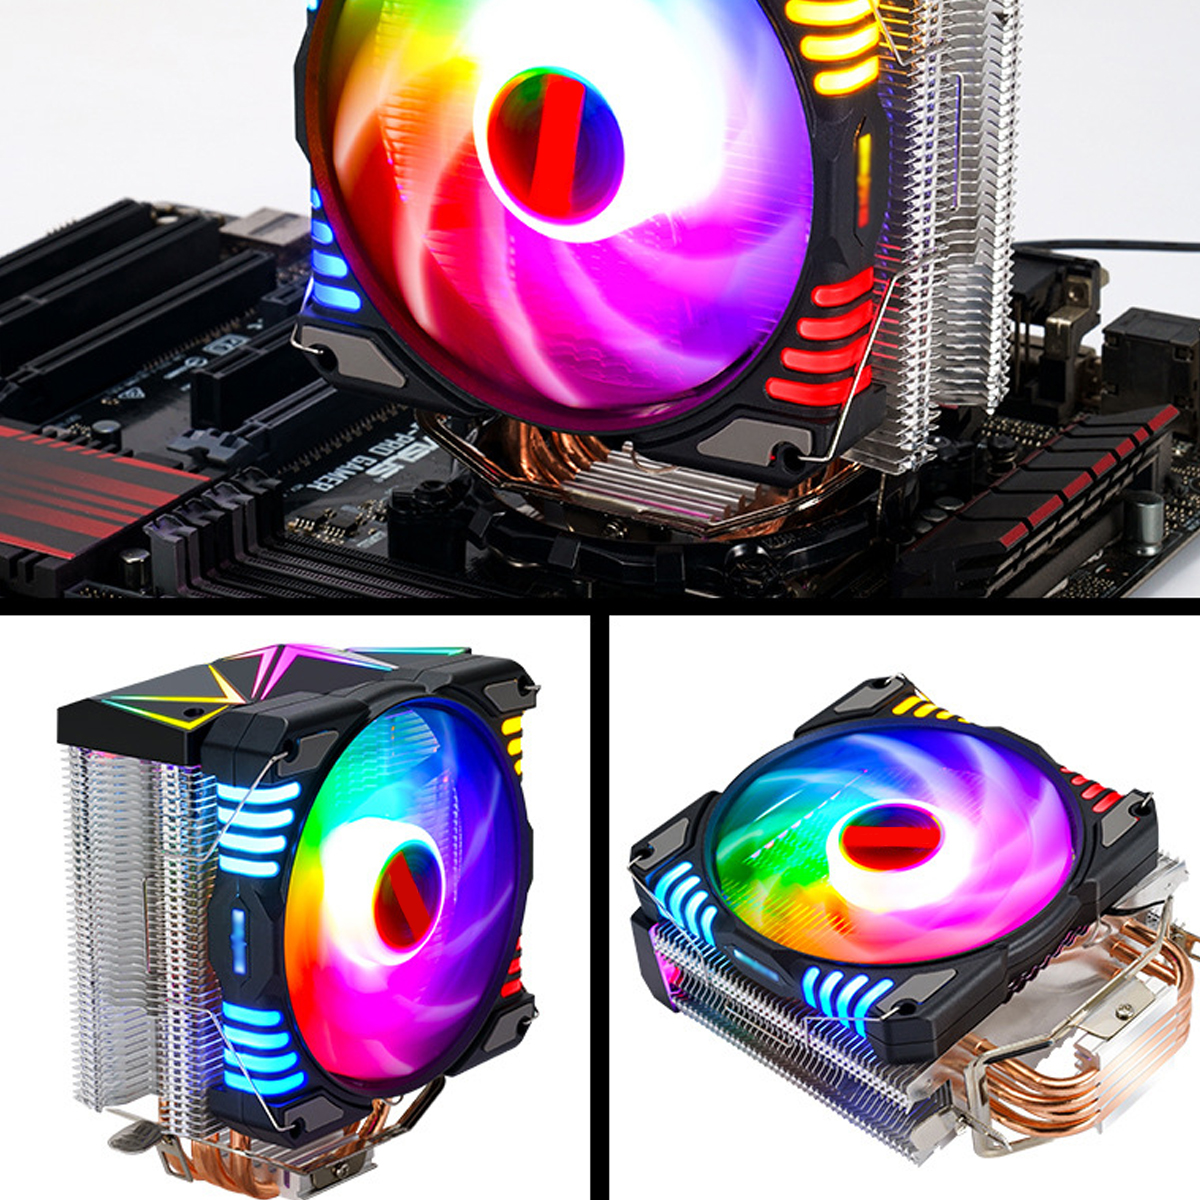 4-Heat-Pipe-RGB-CPU-Cooler-34-Pin-For-Intel-Socket-LGA-77511501151115511561200-AMD-Socket-1973061-11